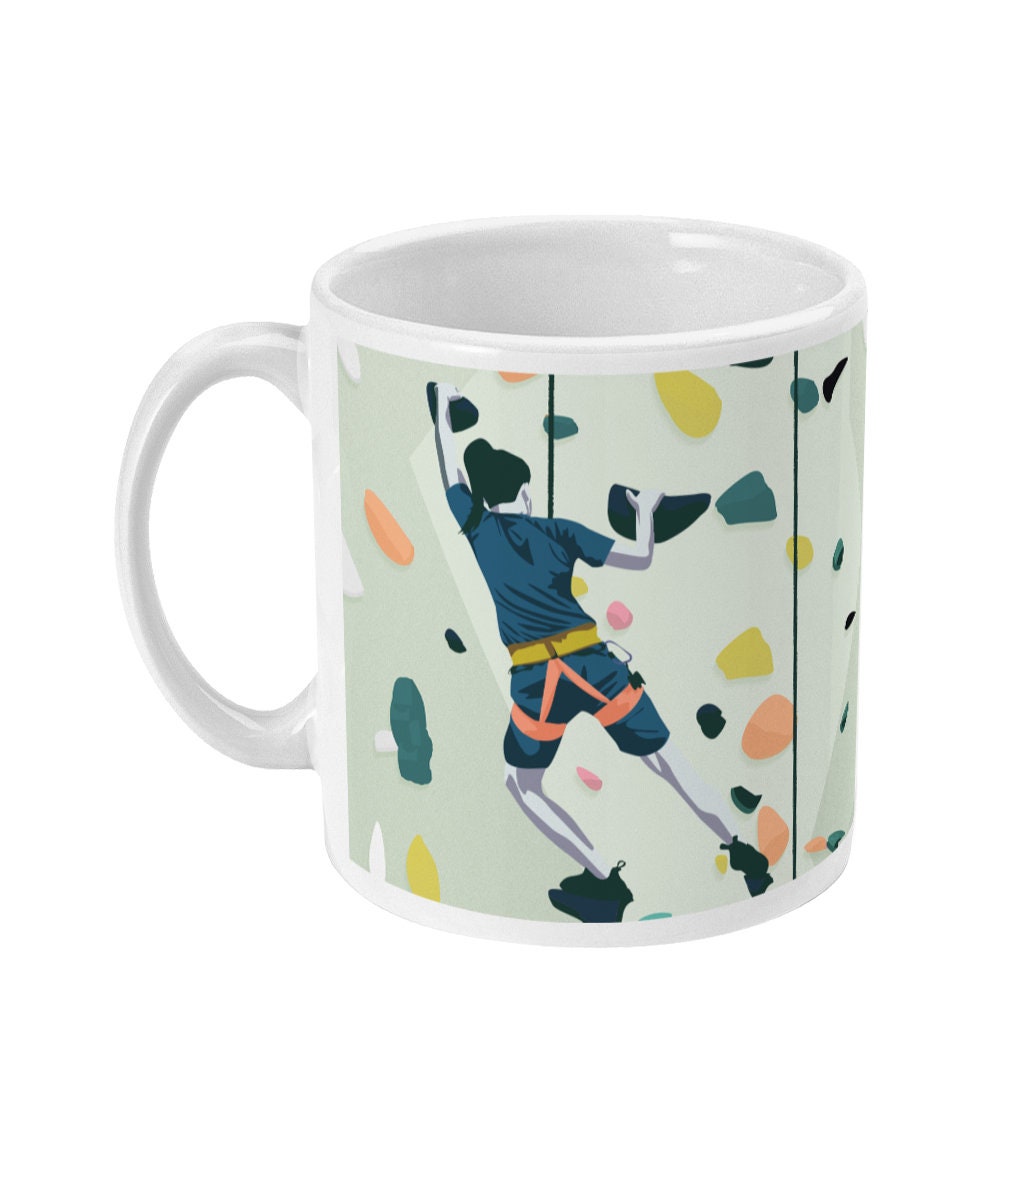 Climbing cup or mug "the woman who climbed" - Customizable